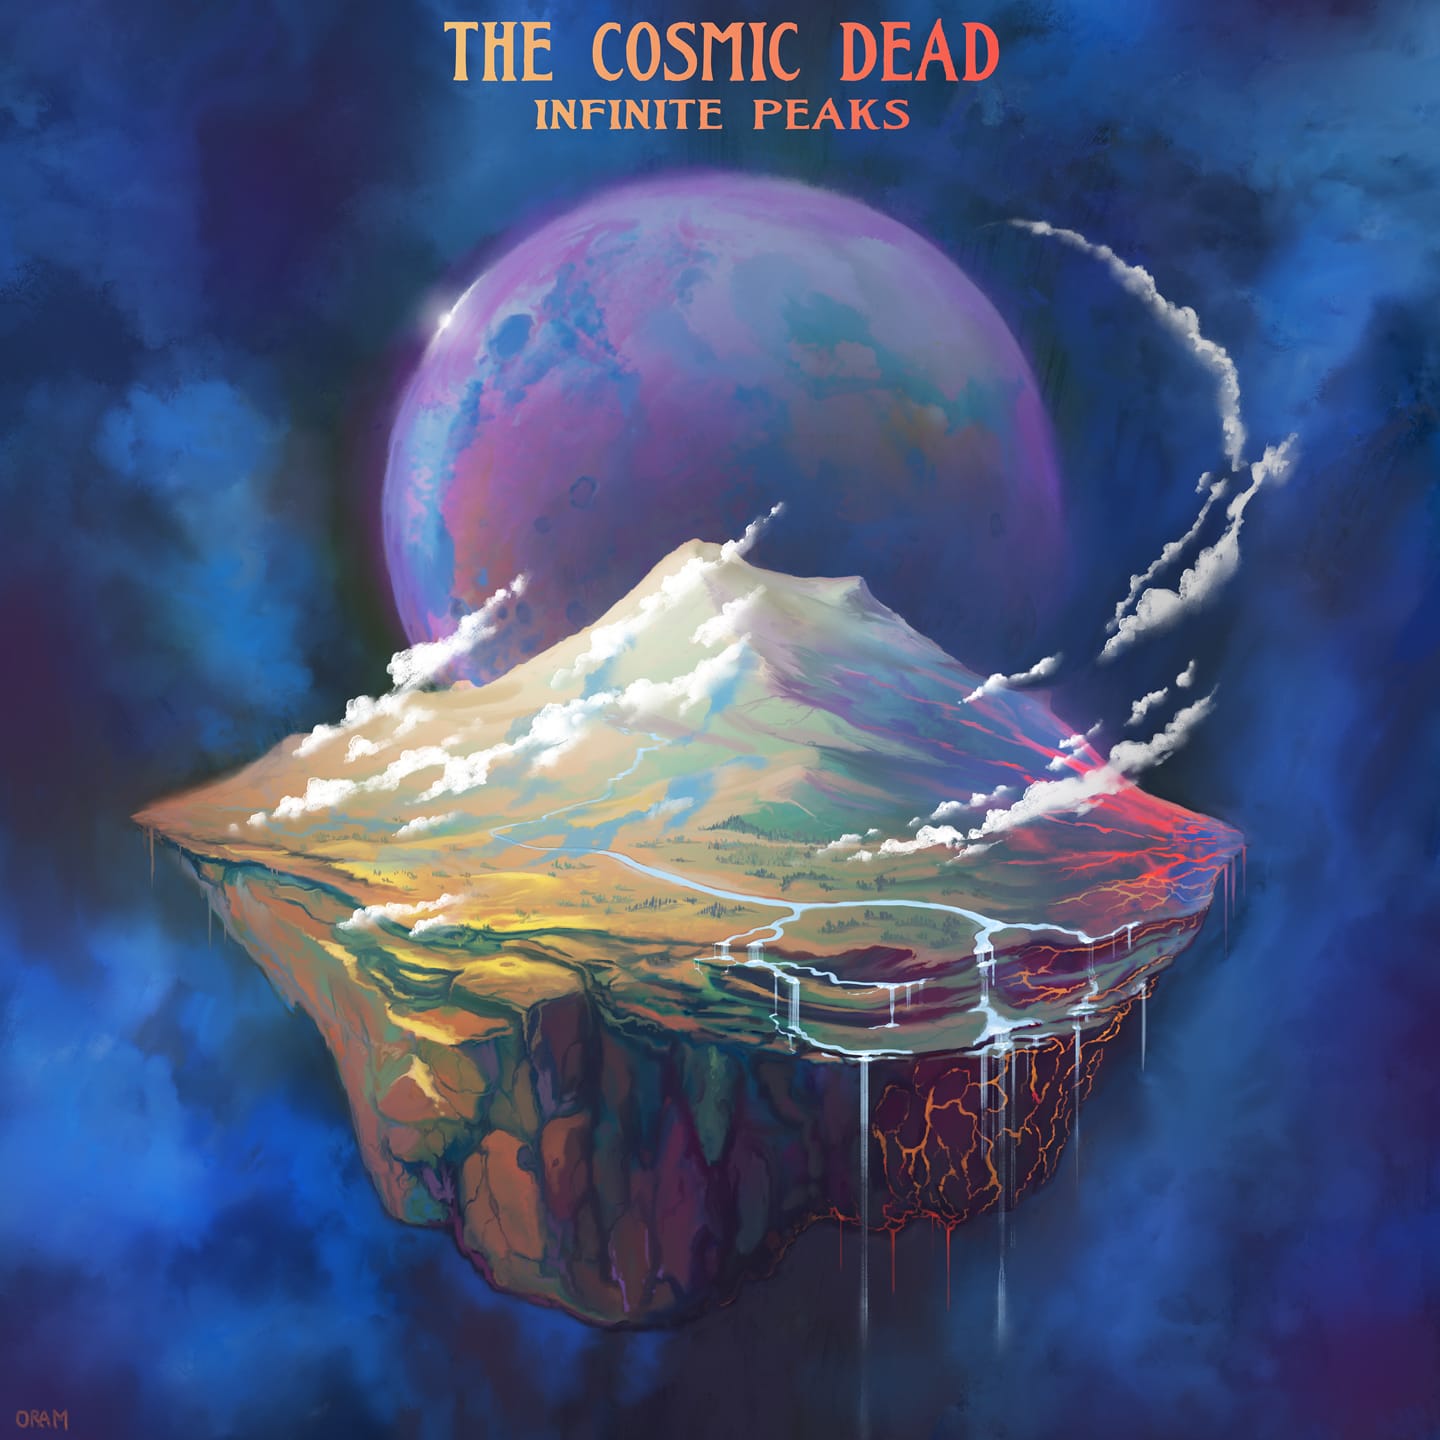 EXCLUSIVE PREMIERE: Explore "Infinite Peaks" With The Cosmic Dead